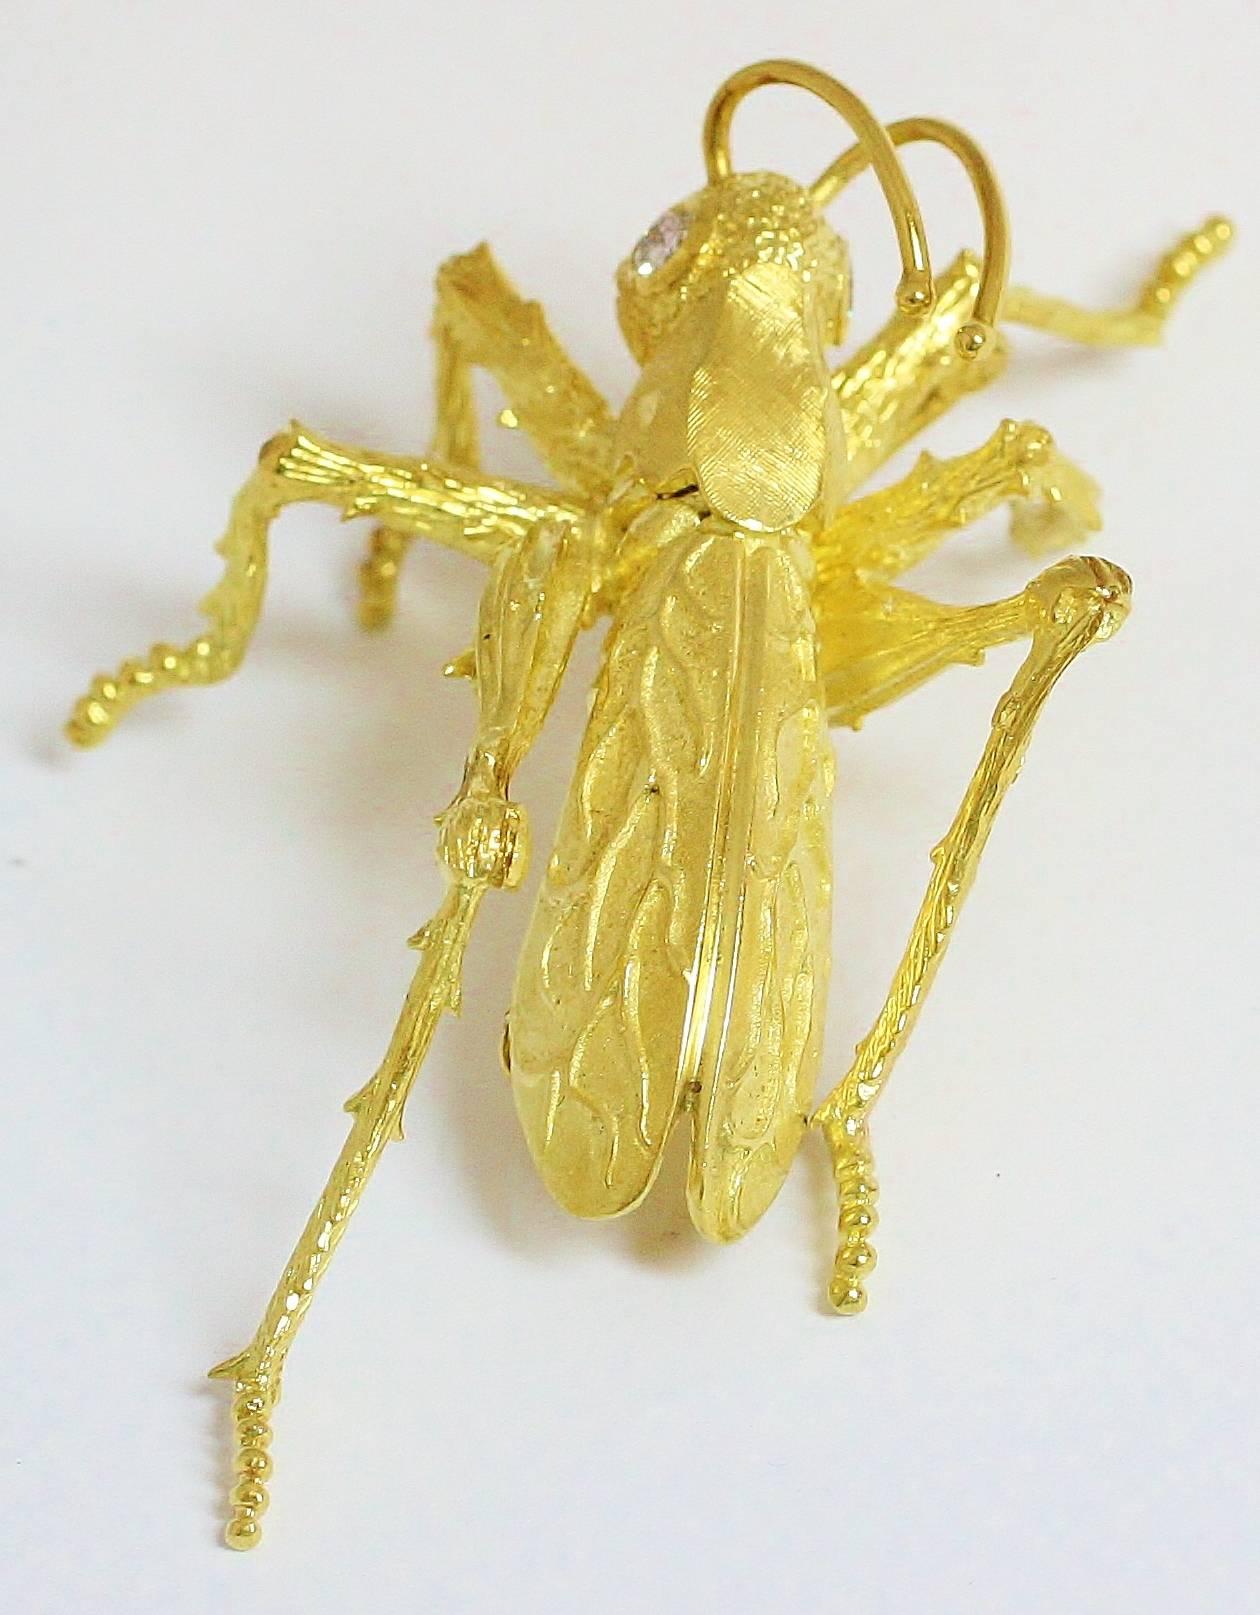 Kurt Wayne Grasshopper Diamond Gold Brooch In Excellent Condition For Sale In La Jolla, CA